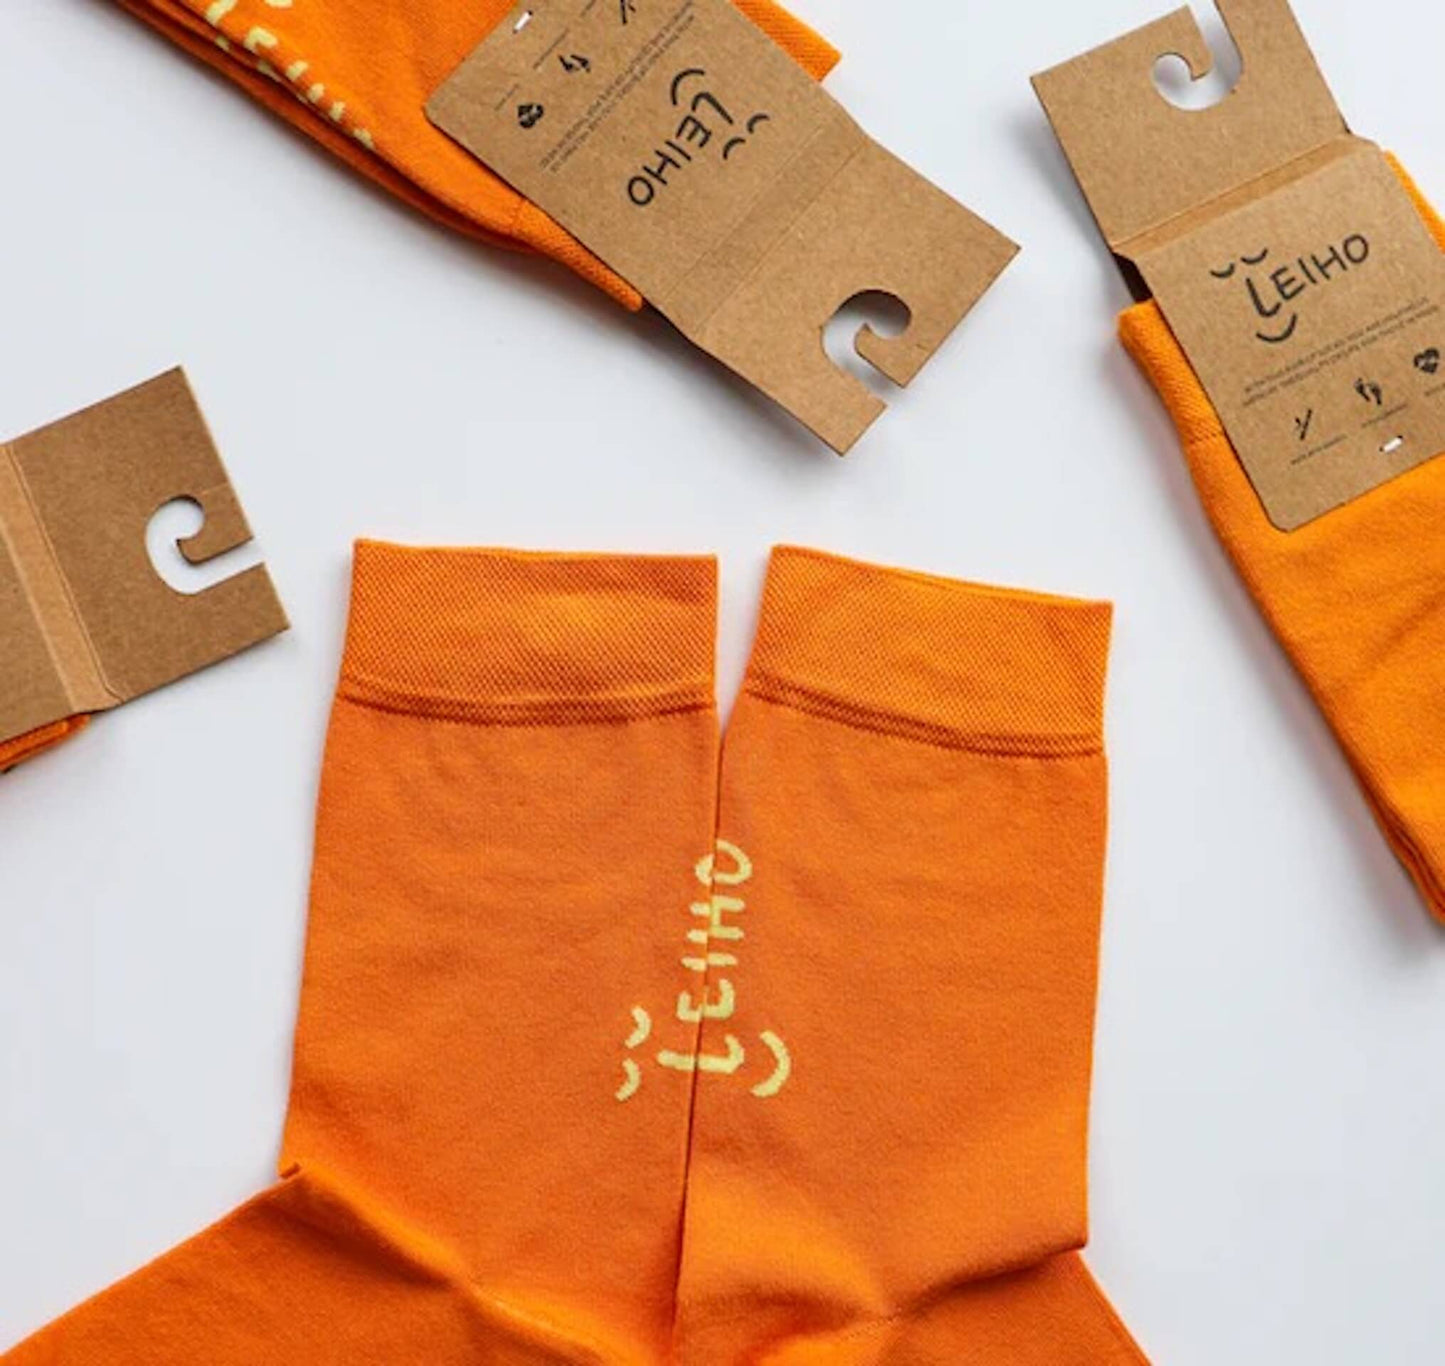 Leiho Socks Smiley Bamboo Socks - 'Follow The Sun' Orange